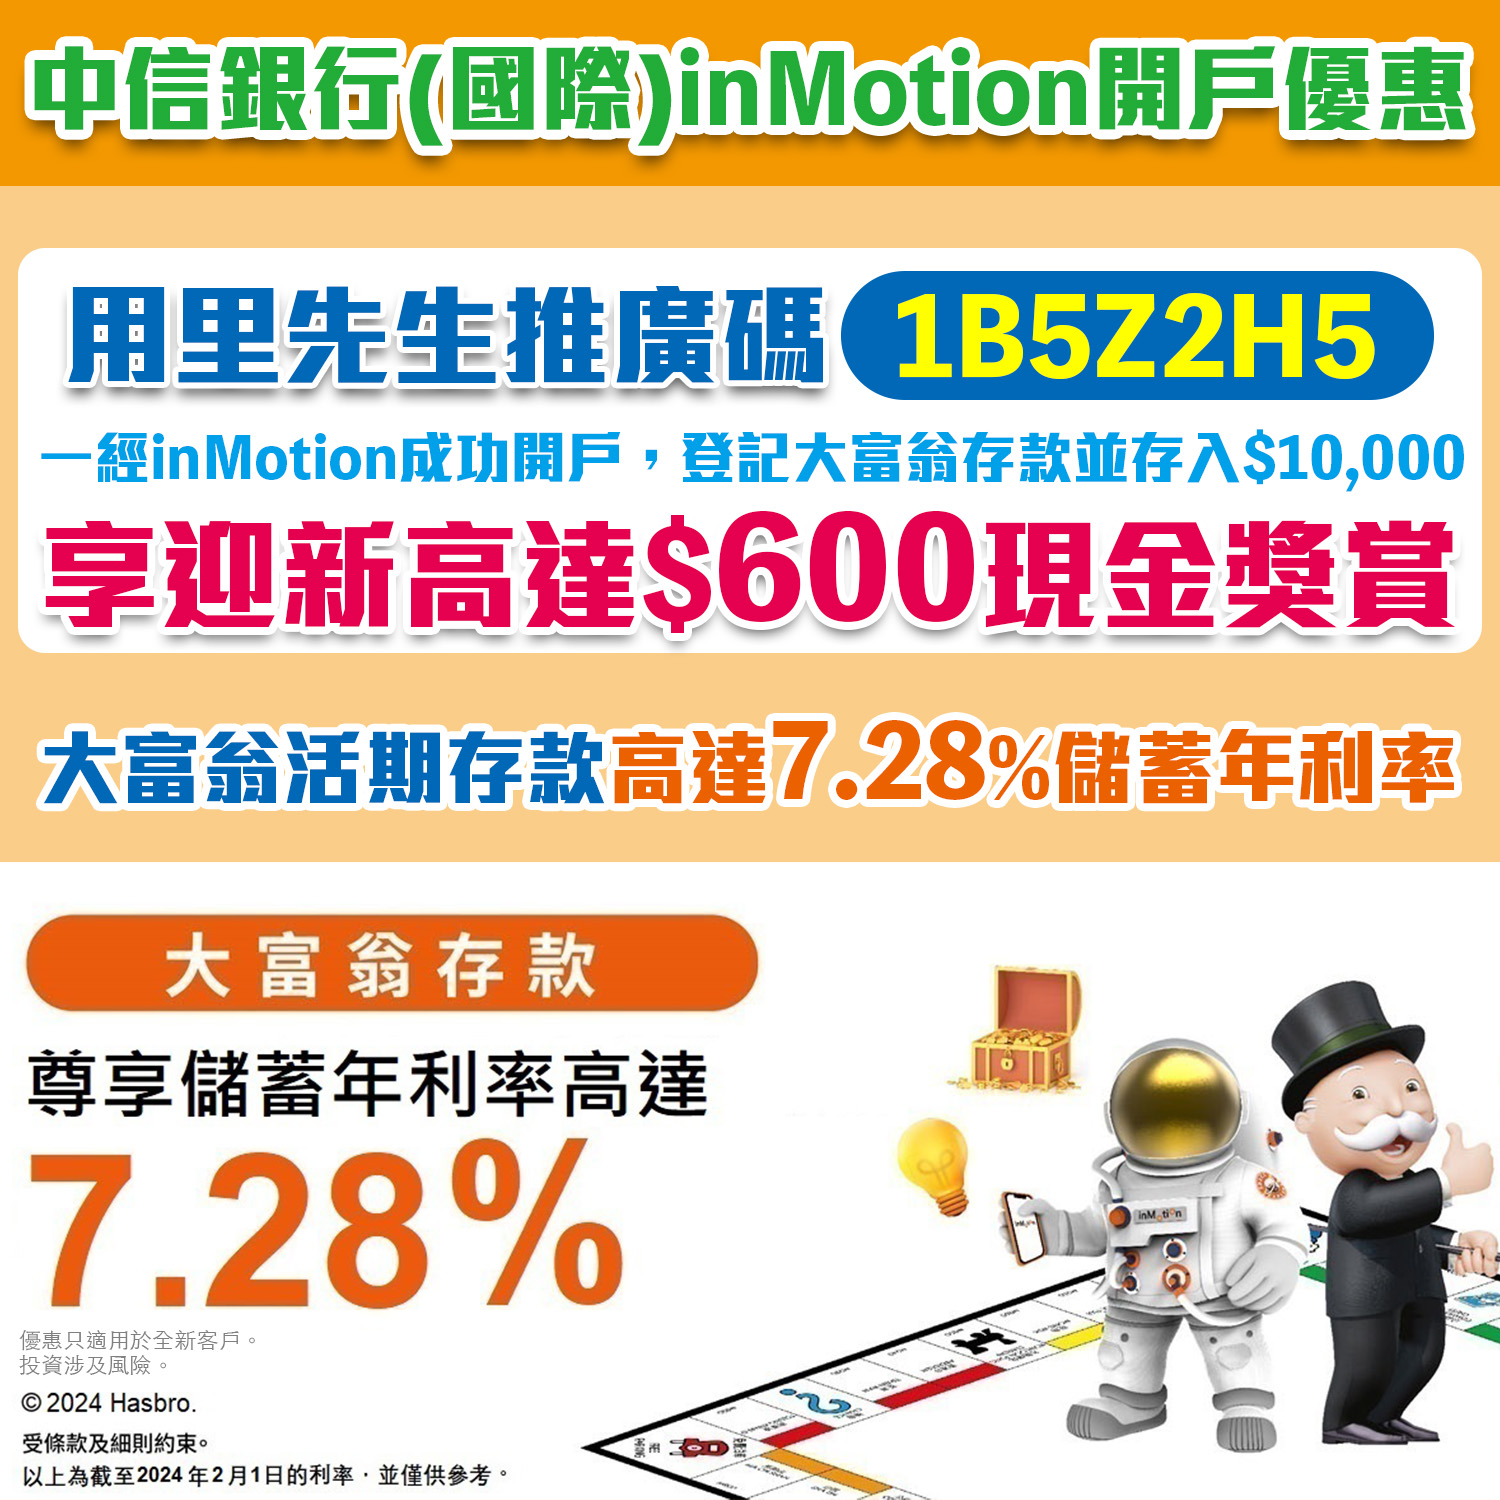 【inMotion開戶優惠】推廣碼額外$200現金回贈！Citic大富翁活期存款高達7.28%年利率！